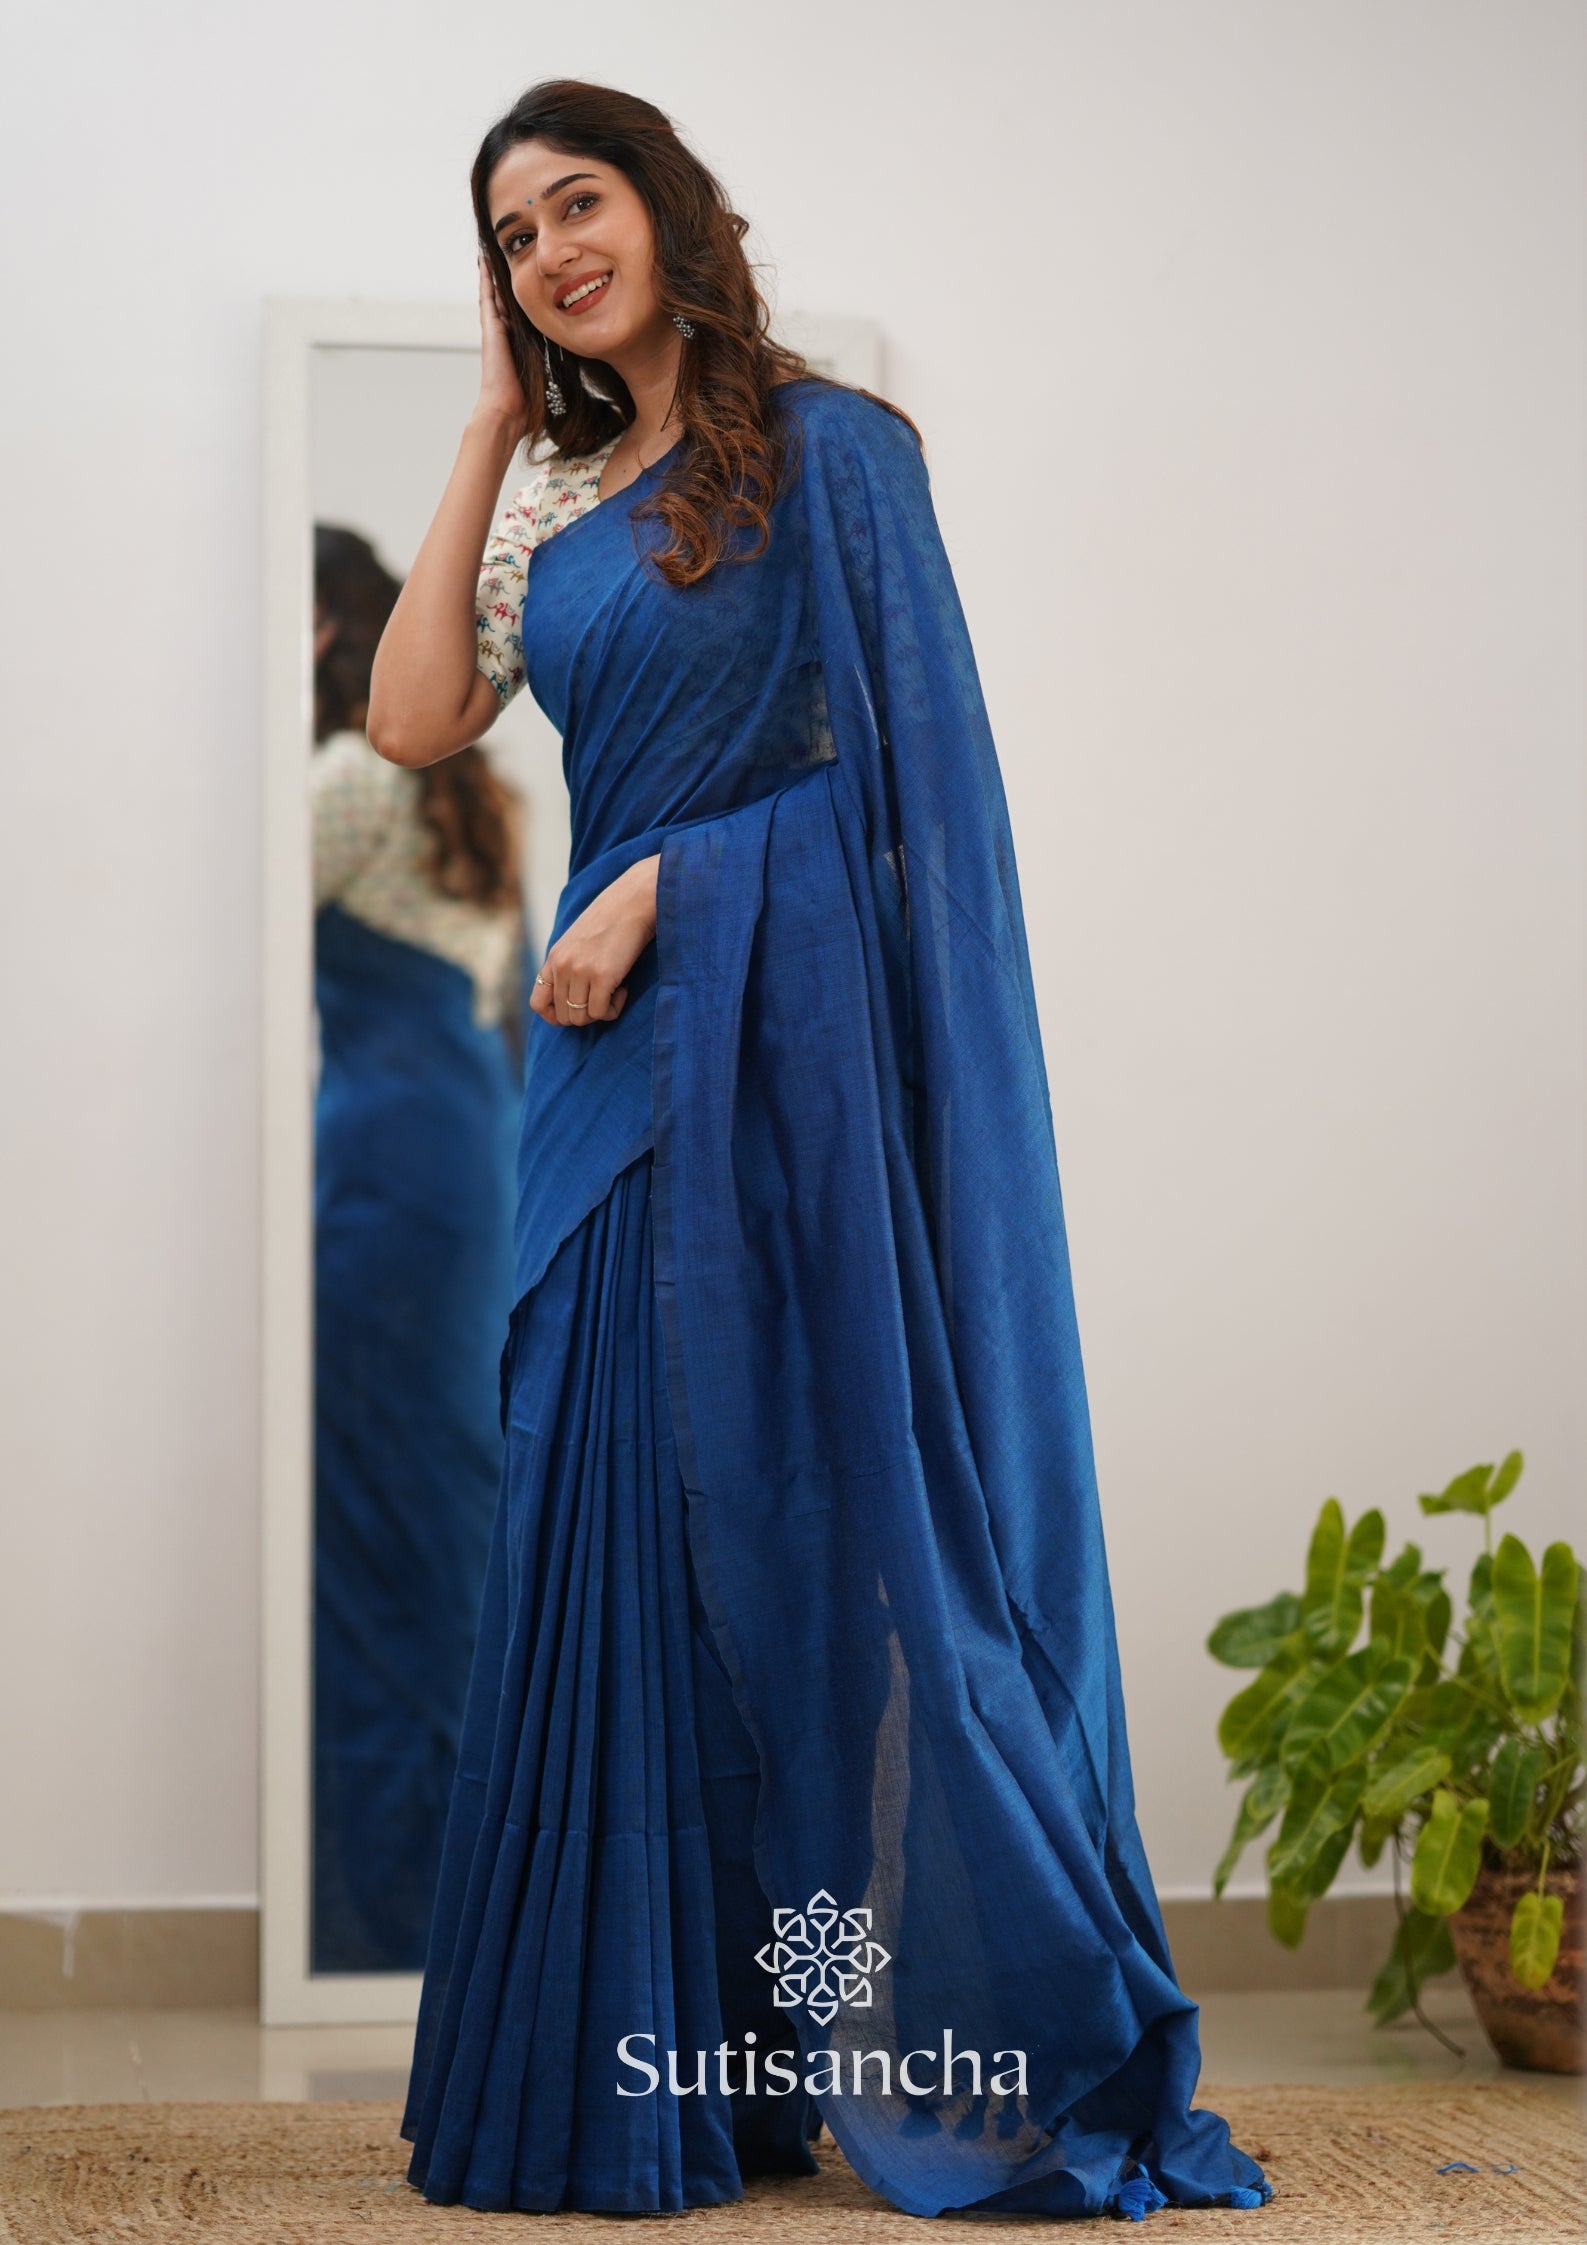 Sutisancha Indigo Handloom Cotton Saree & Designer Blouse